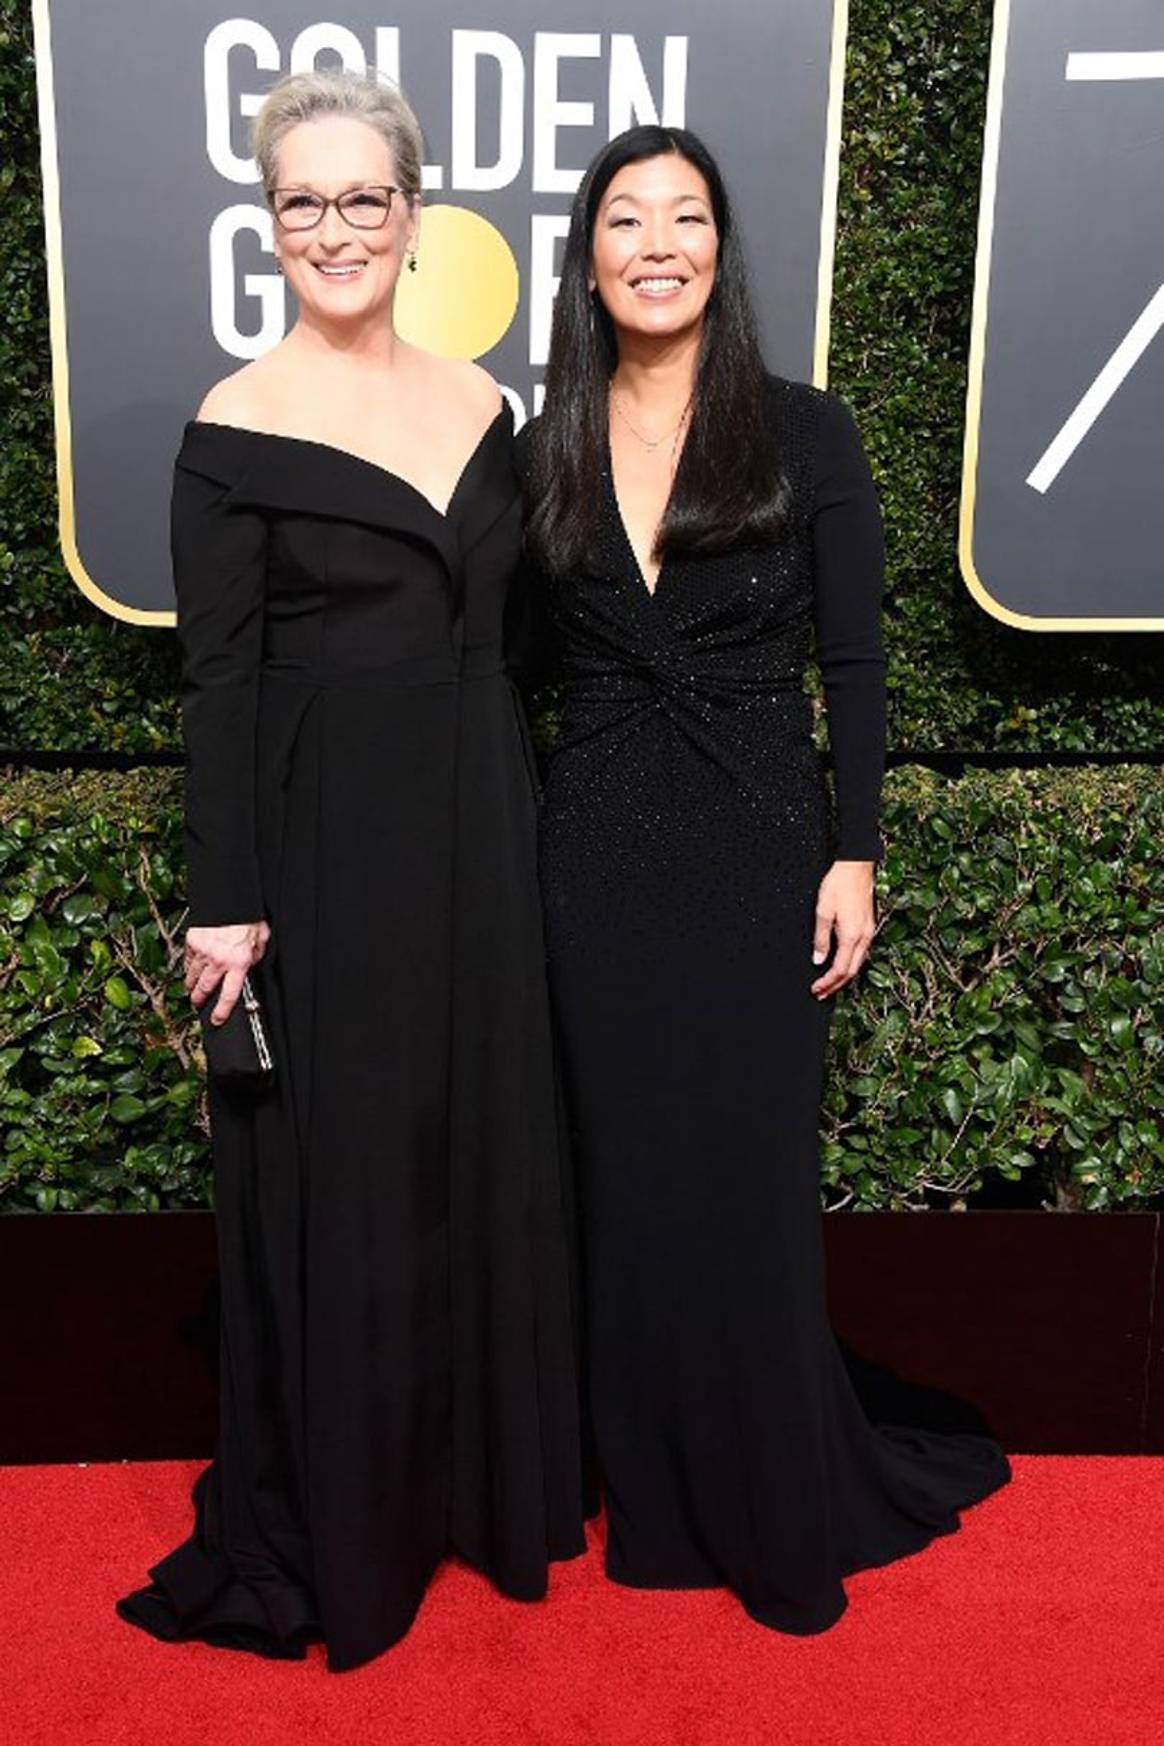 Golden Globes 2018: The ‘Blackout’ red carpet